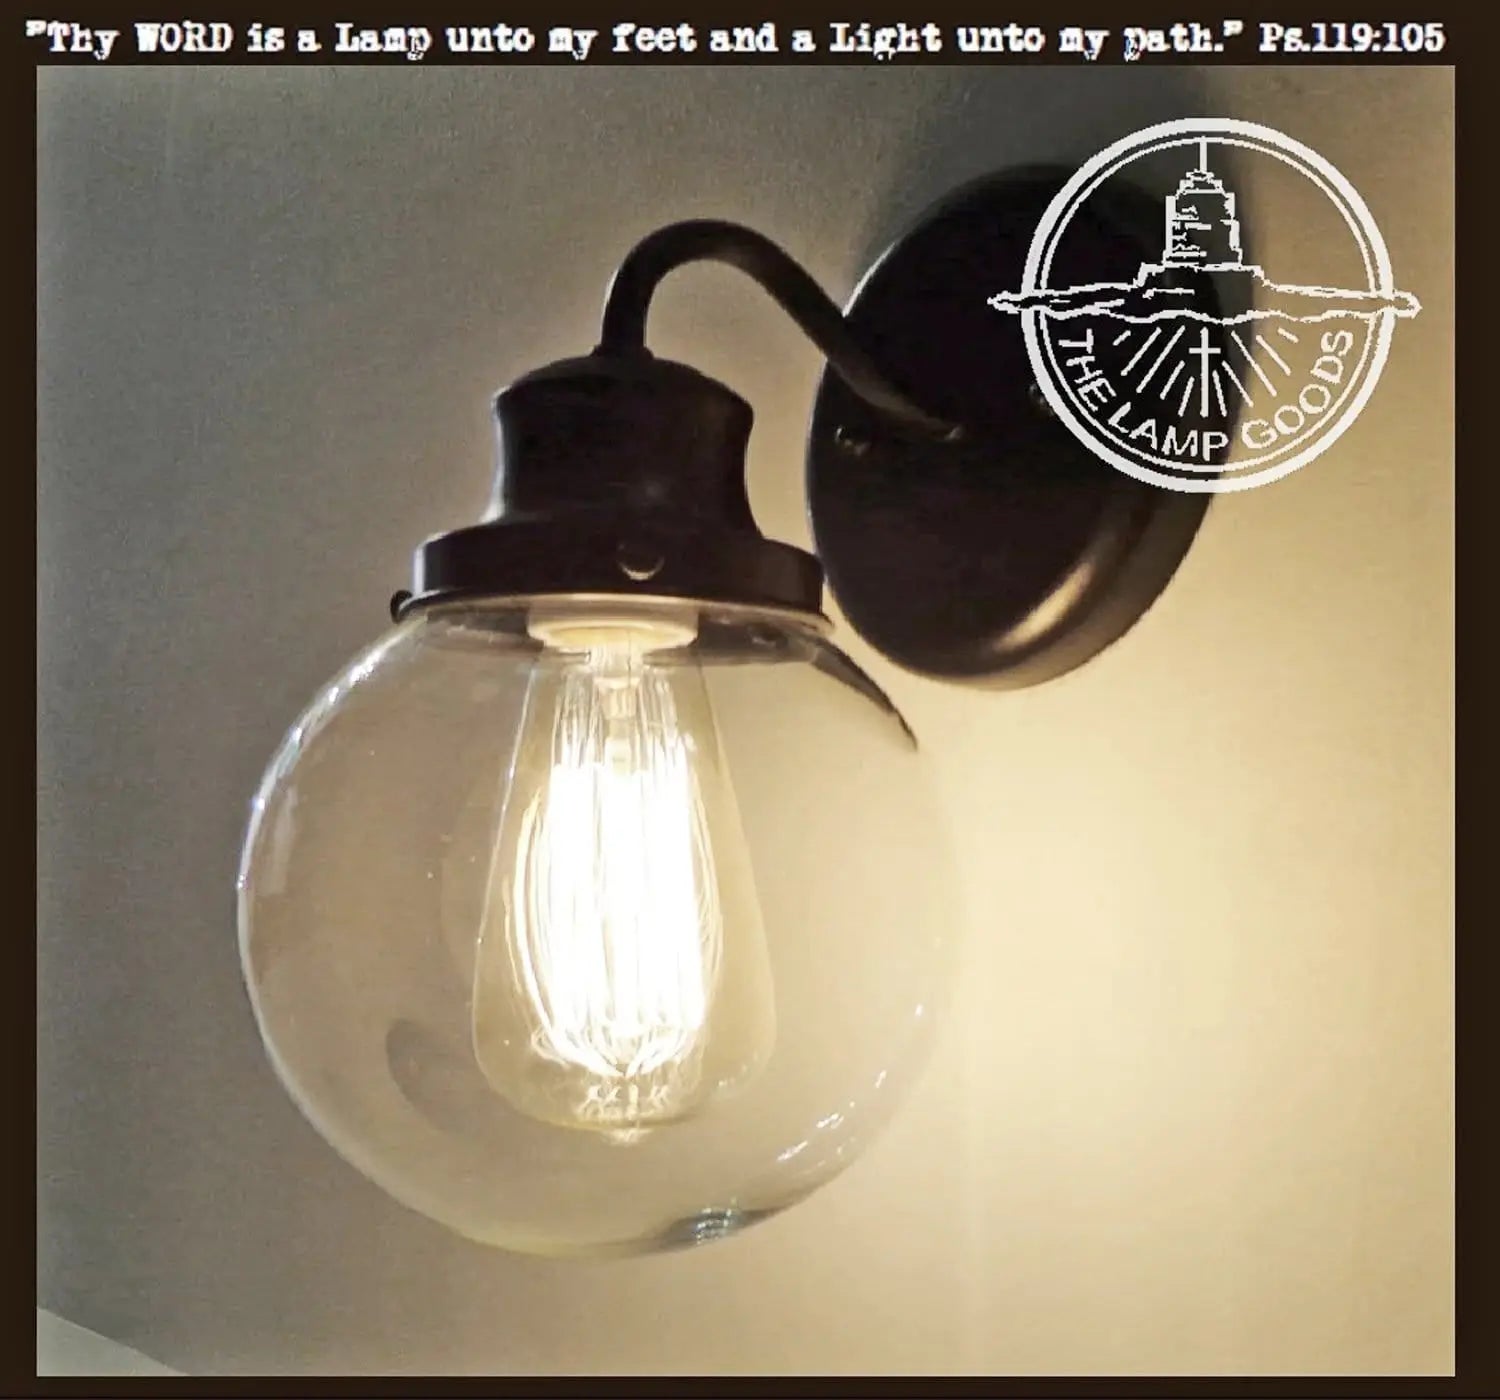 Biddeford II. Glass WALL Light with Edison Bulb - The Lamp Goods